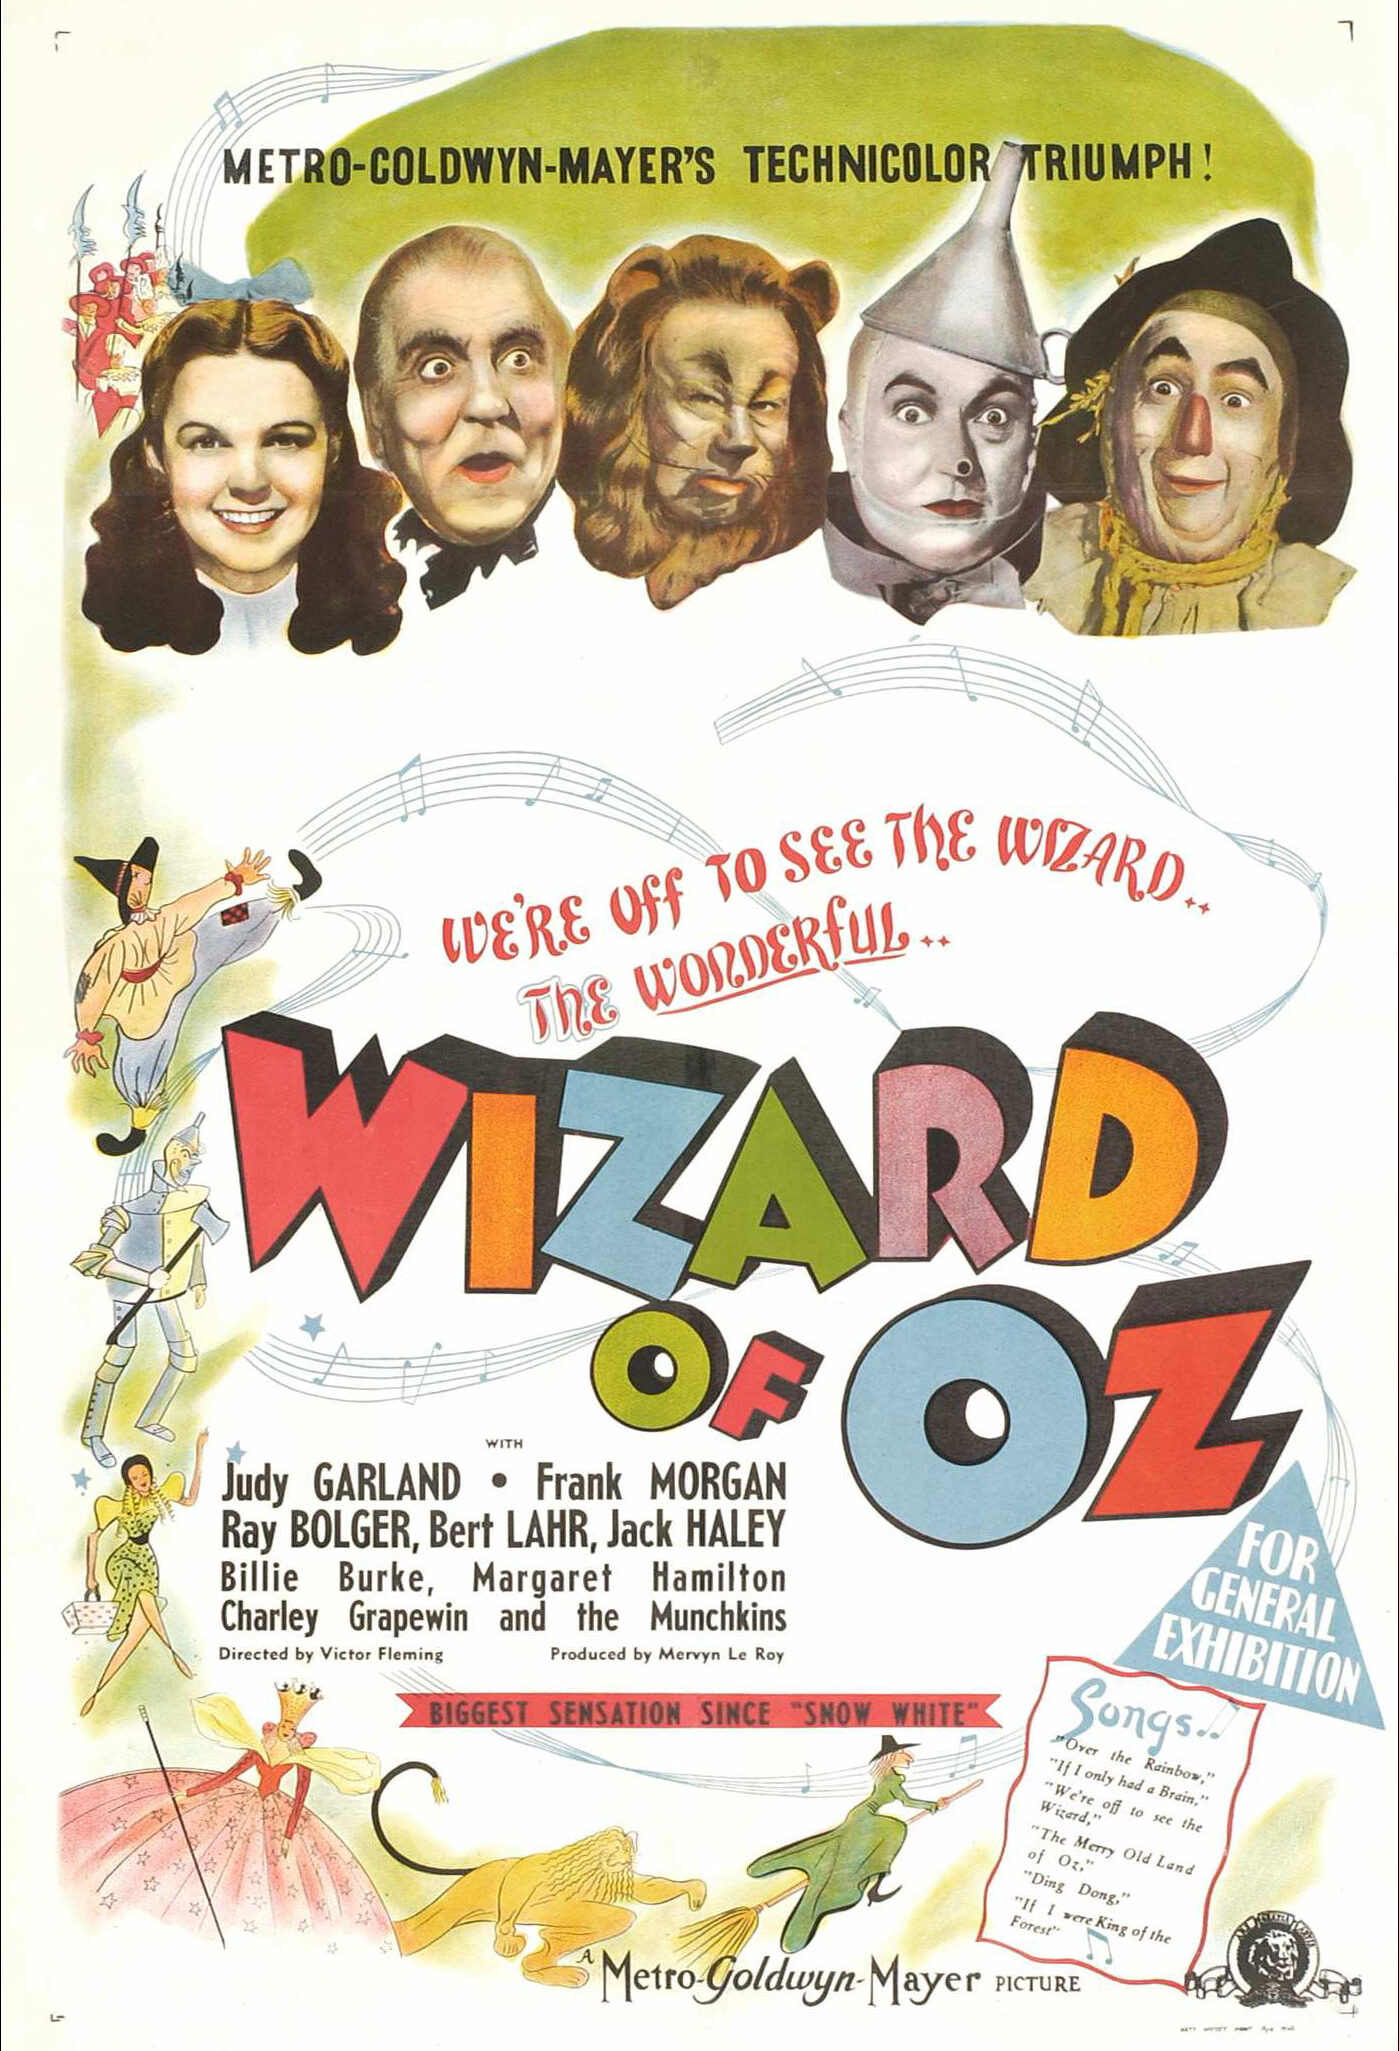 Wizard_of_oz_movie_poster.jpg